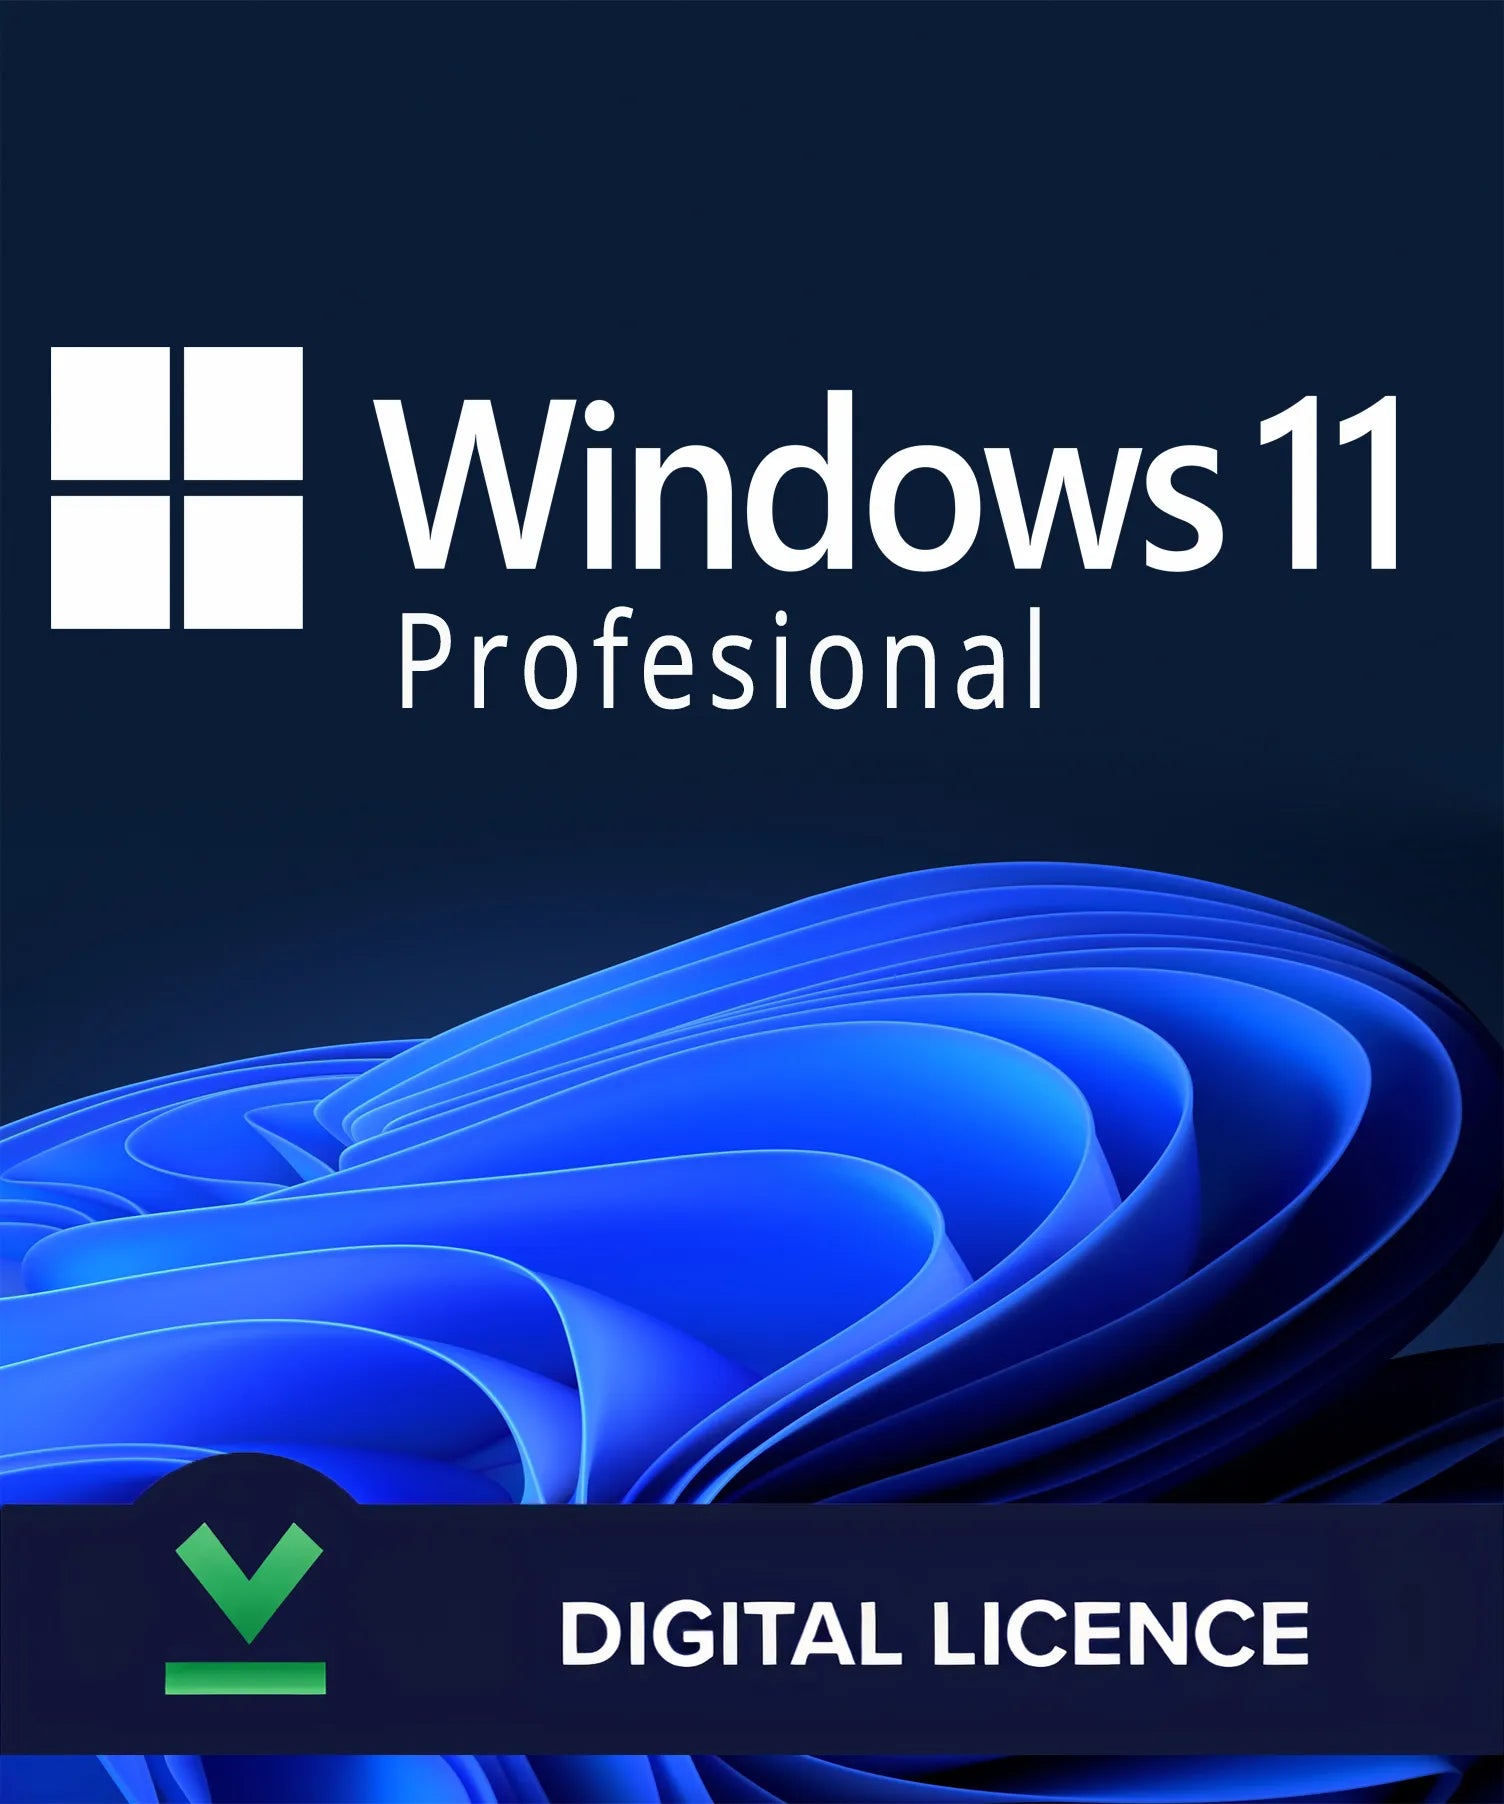 WINDOWS 11 PROFESSIONAL - PC - WINDOWS STORE - MULTILANGUAGE - WORLDWIDE - Libelula Vesela - Software